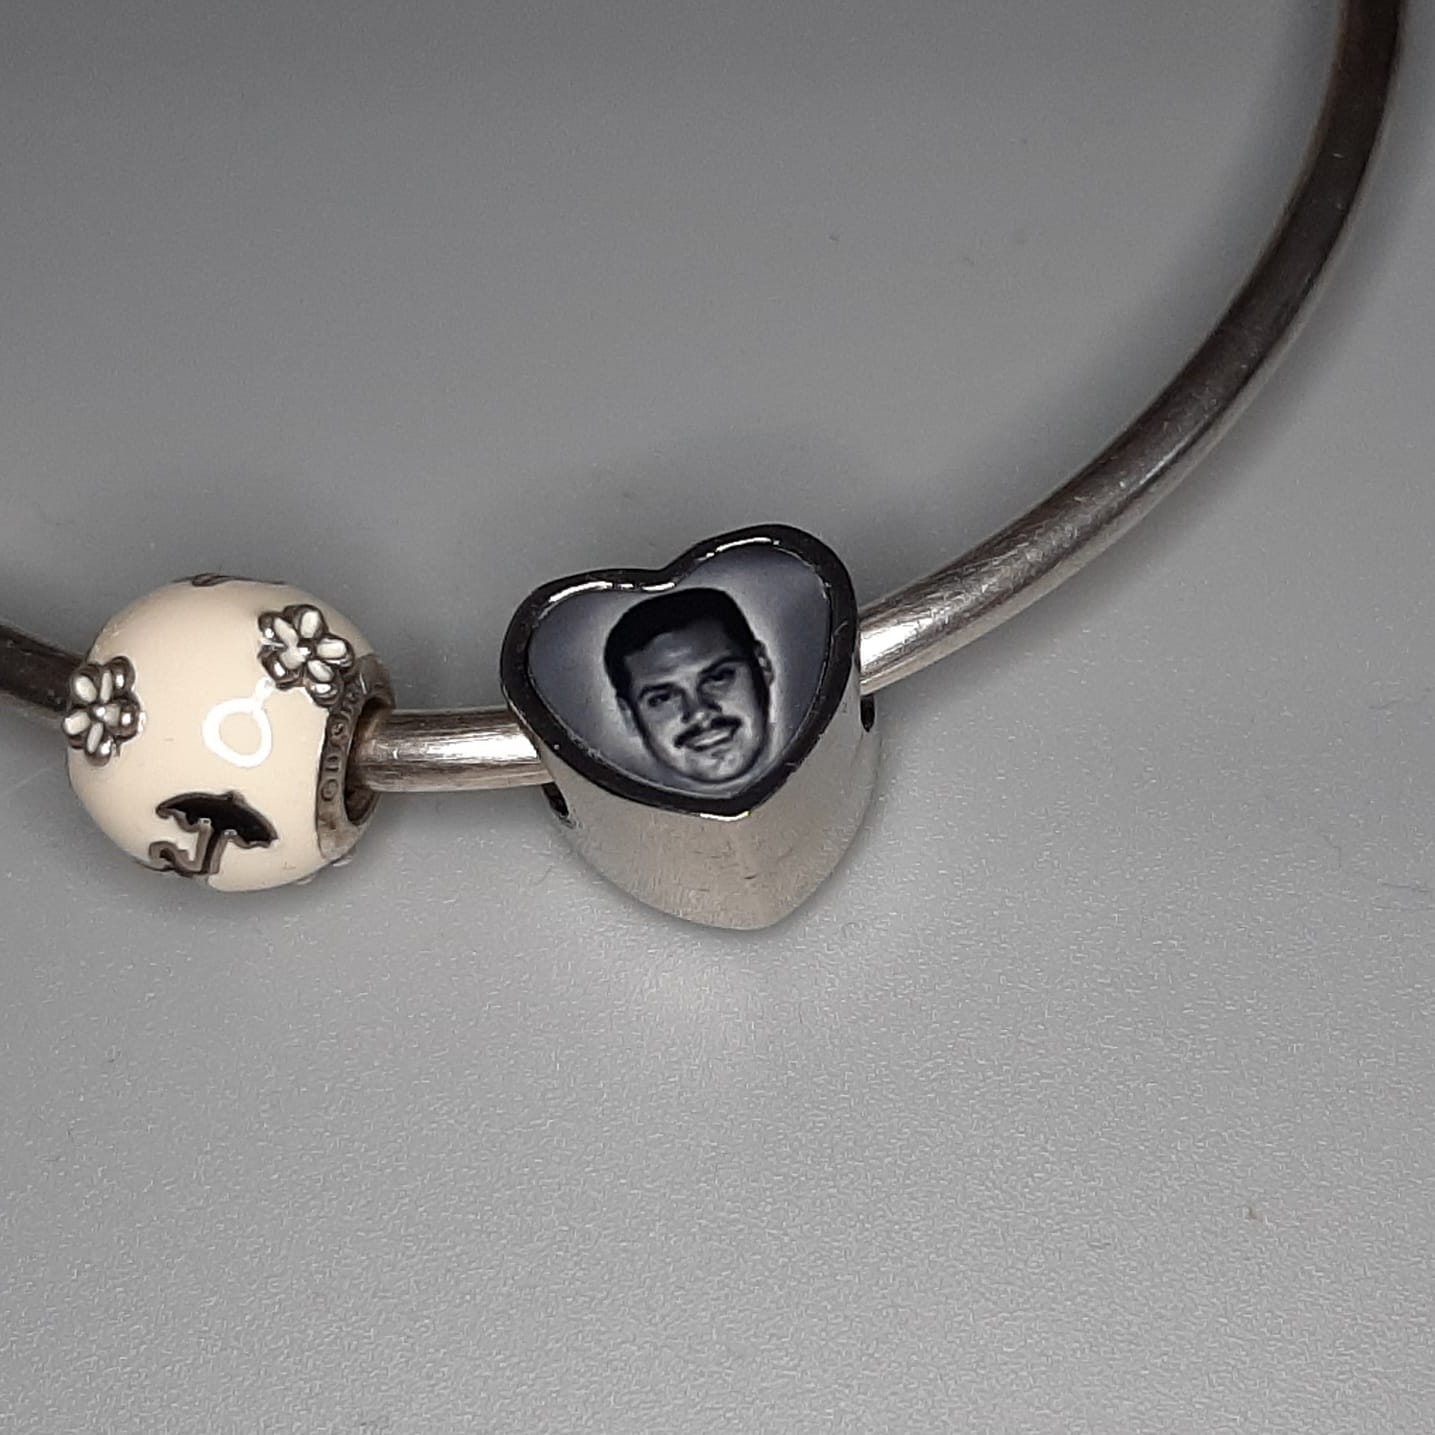 Heart Alloy Bracelet Charm on a pandora bracelet with a black and white photo